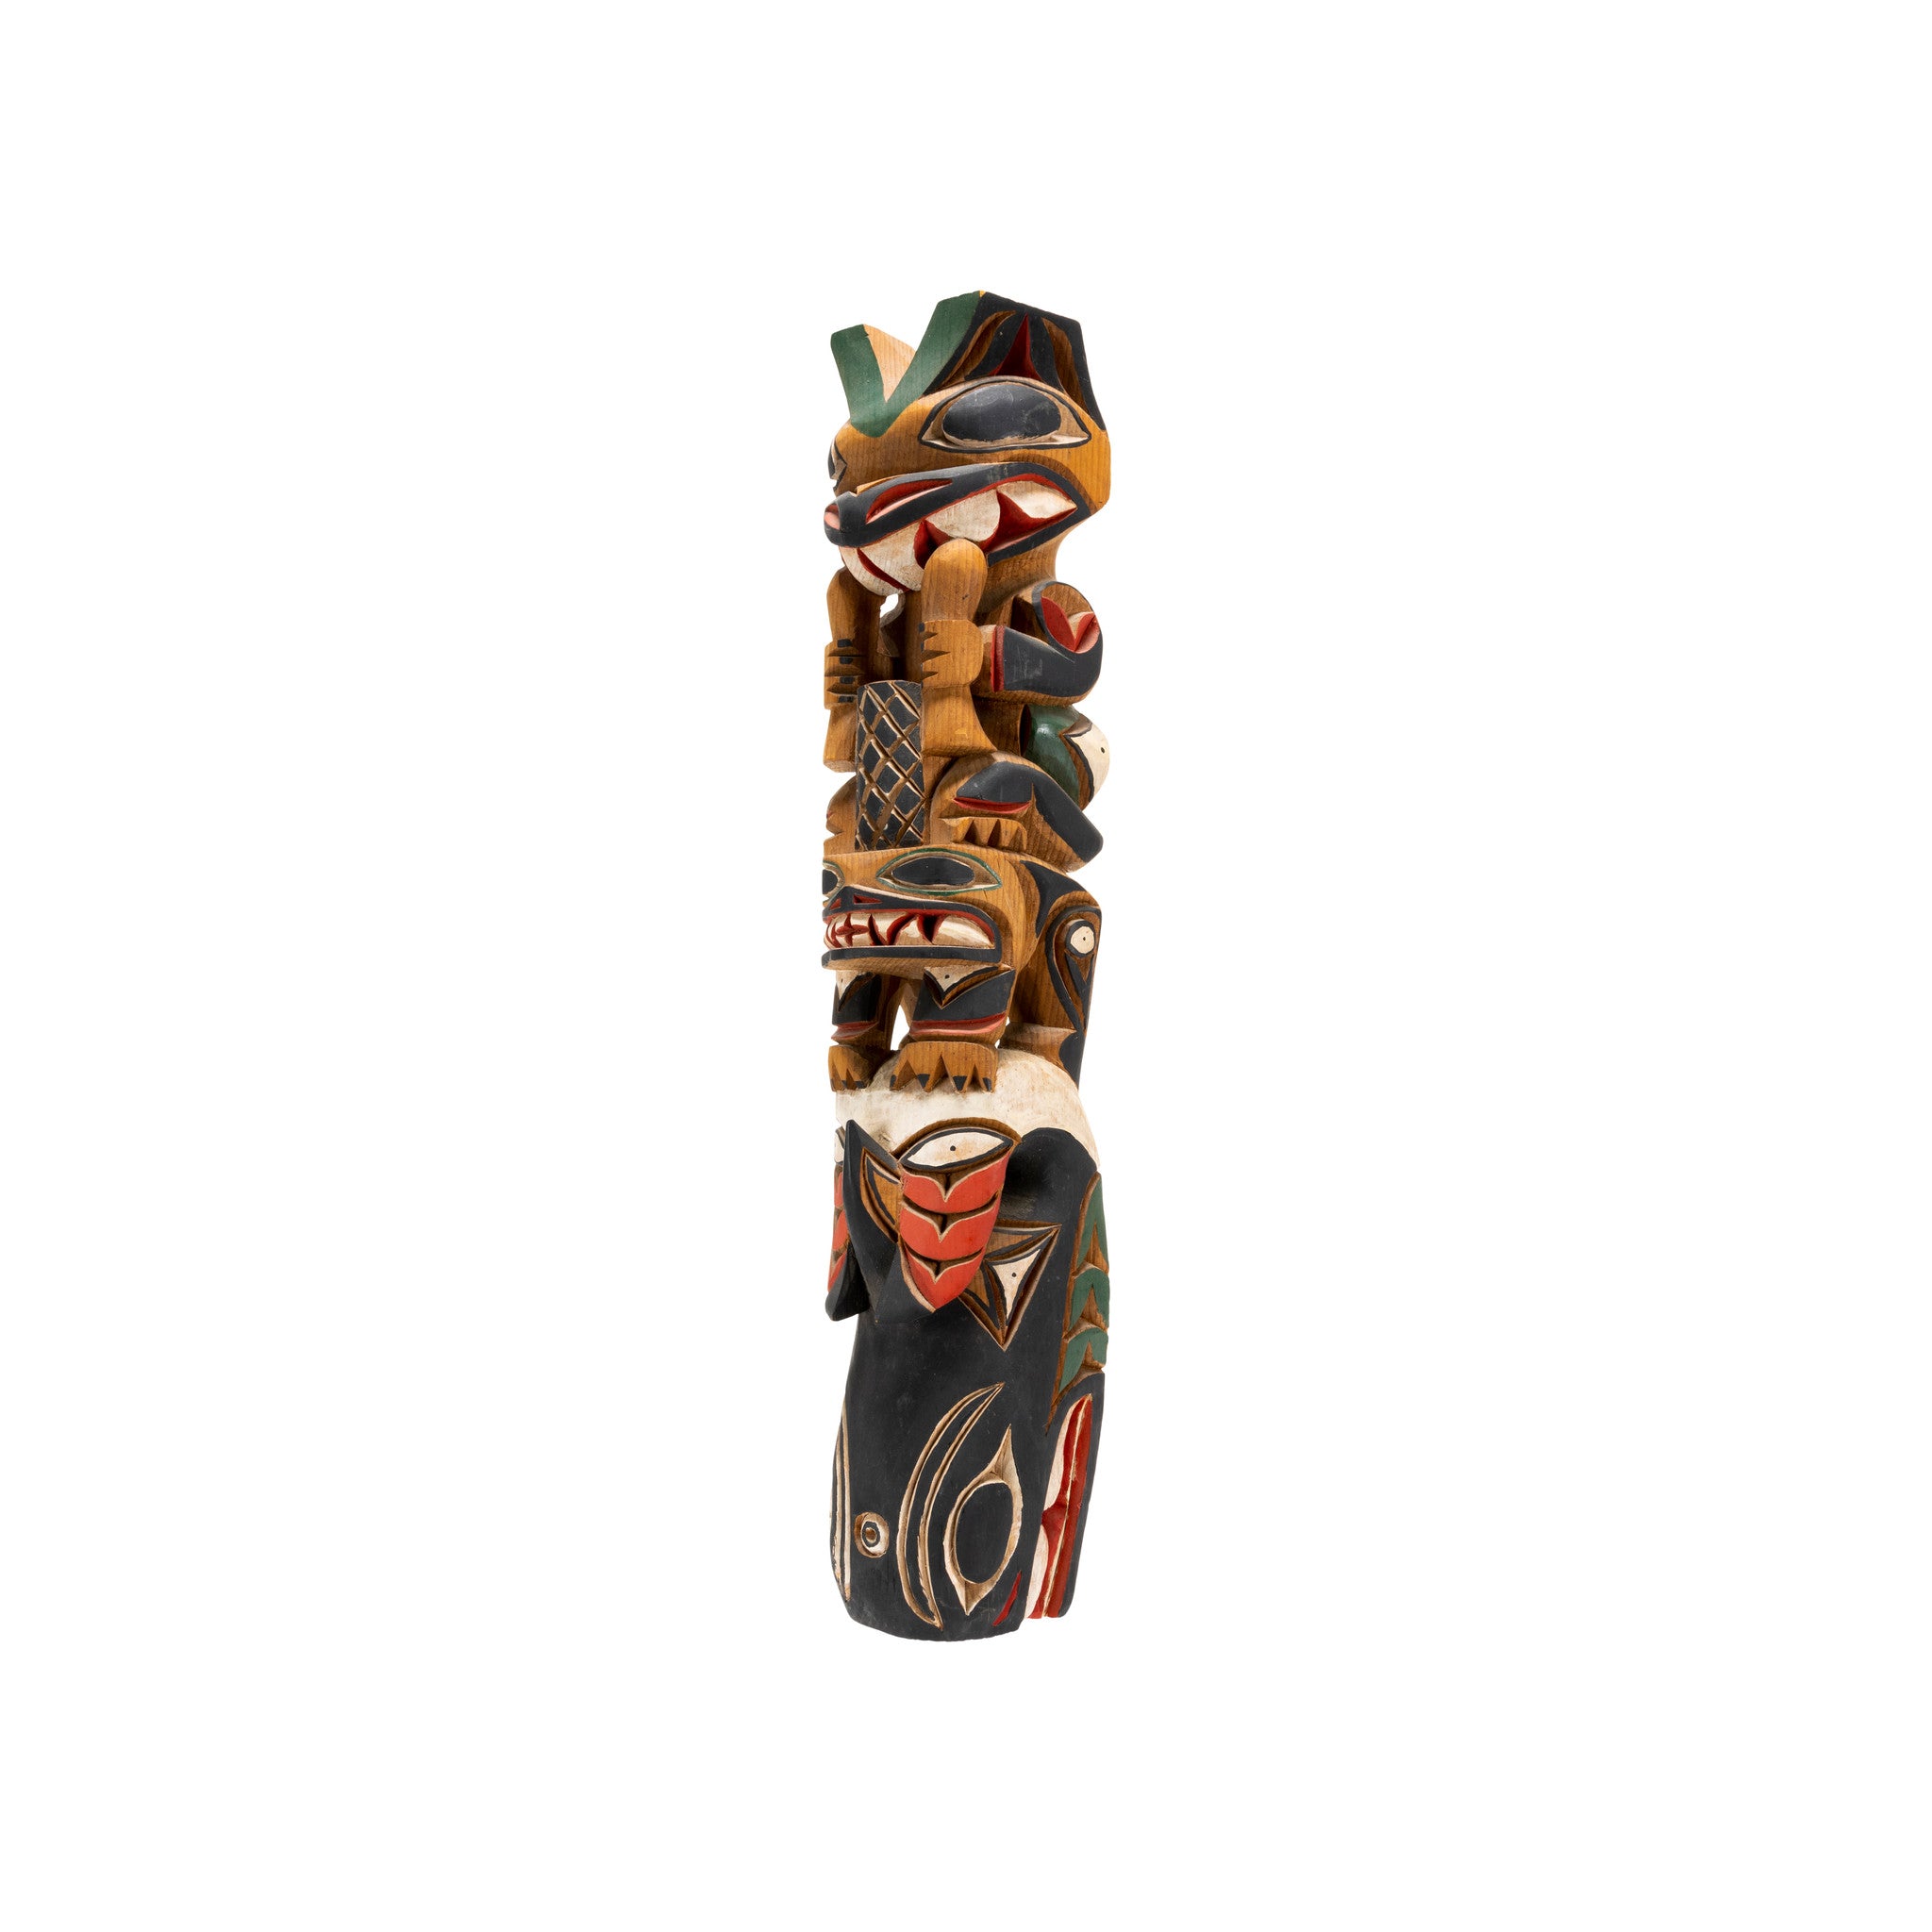 Ditidaht/Nuu-Chah-Nulth Totem by John T. Williams